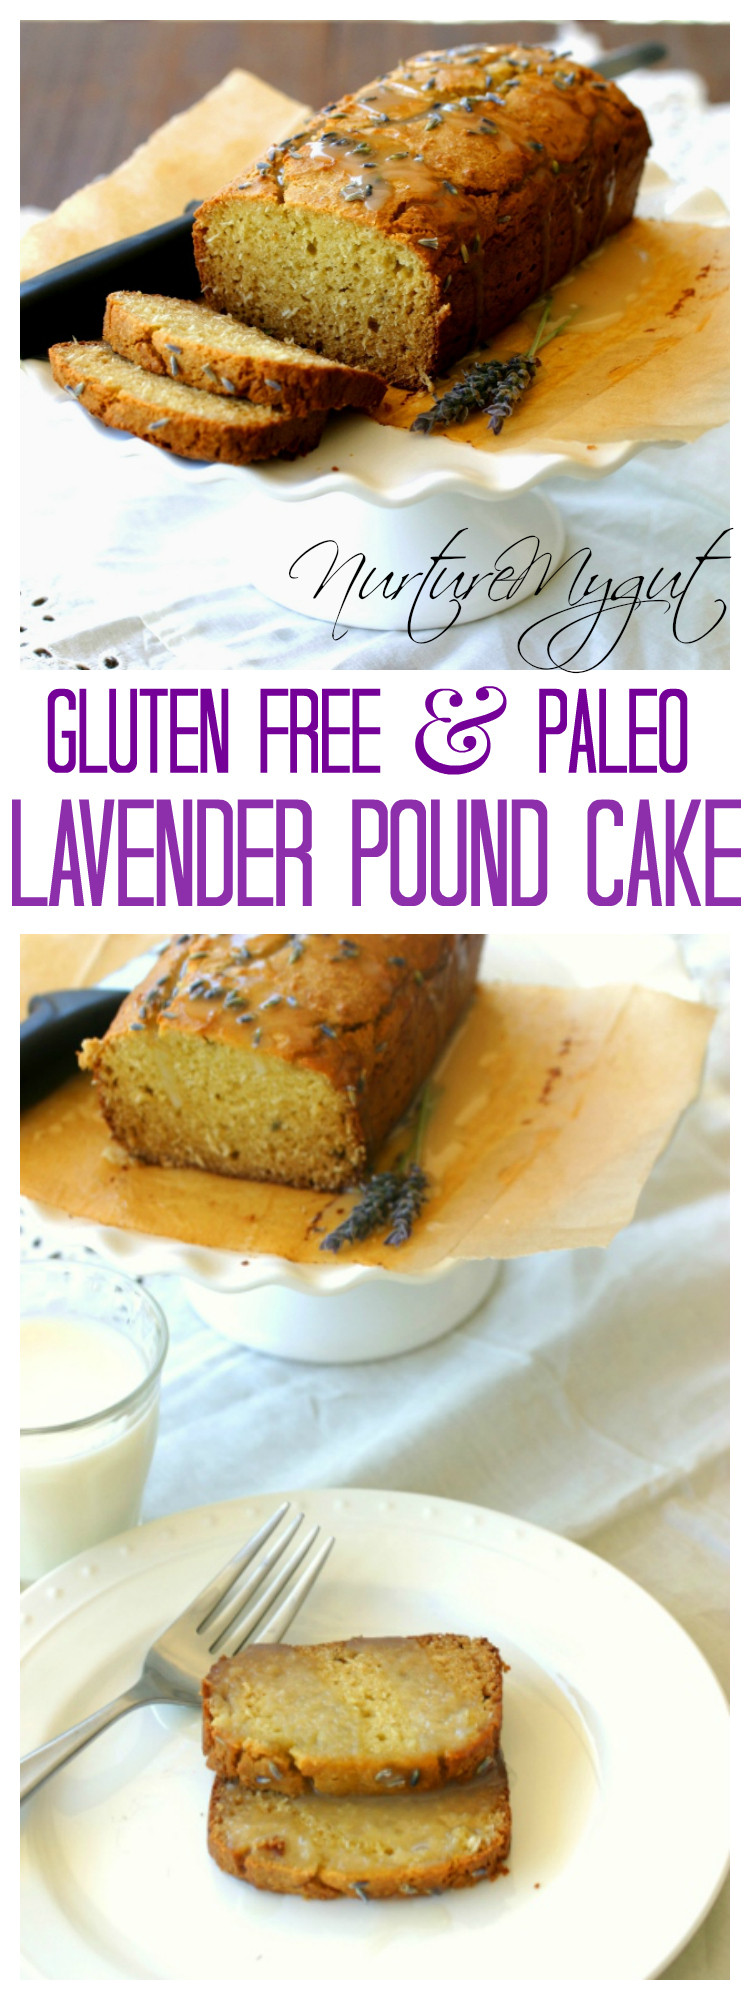 Dairy Free Pound Cake
 Gluten Free Lavender Pound Cake Paleo Dairy free